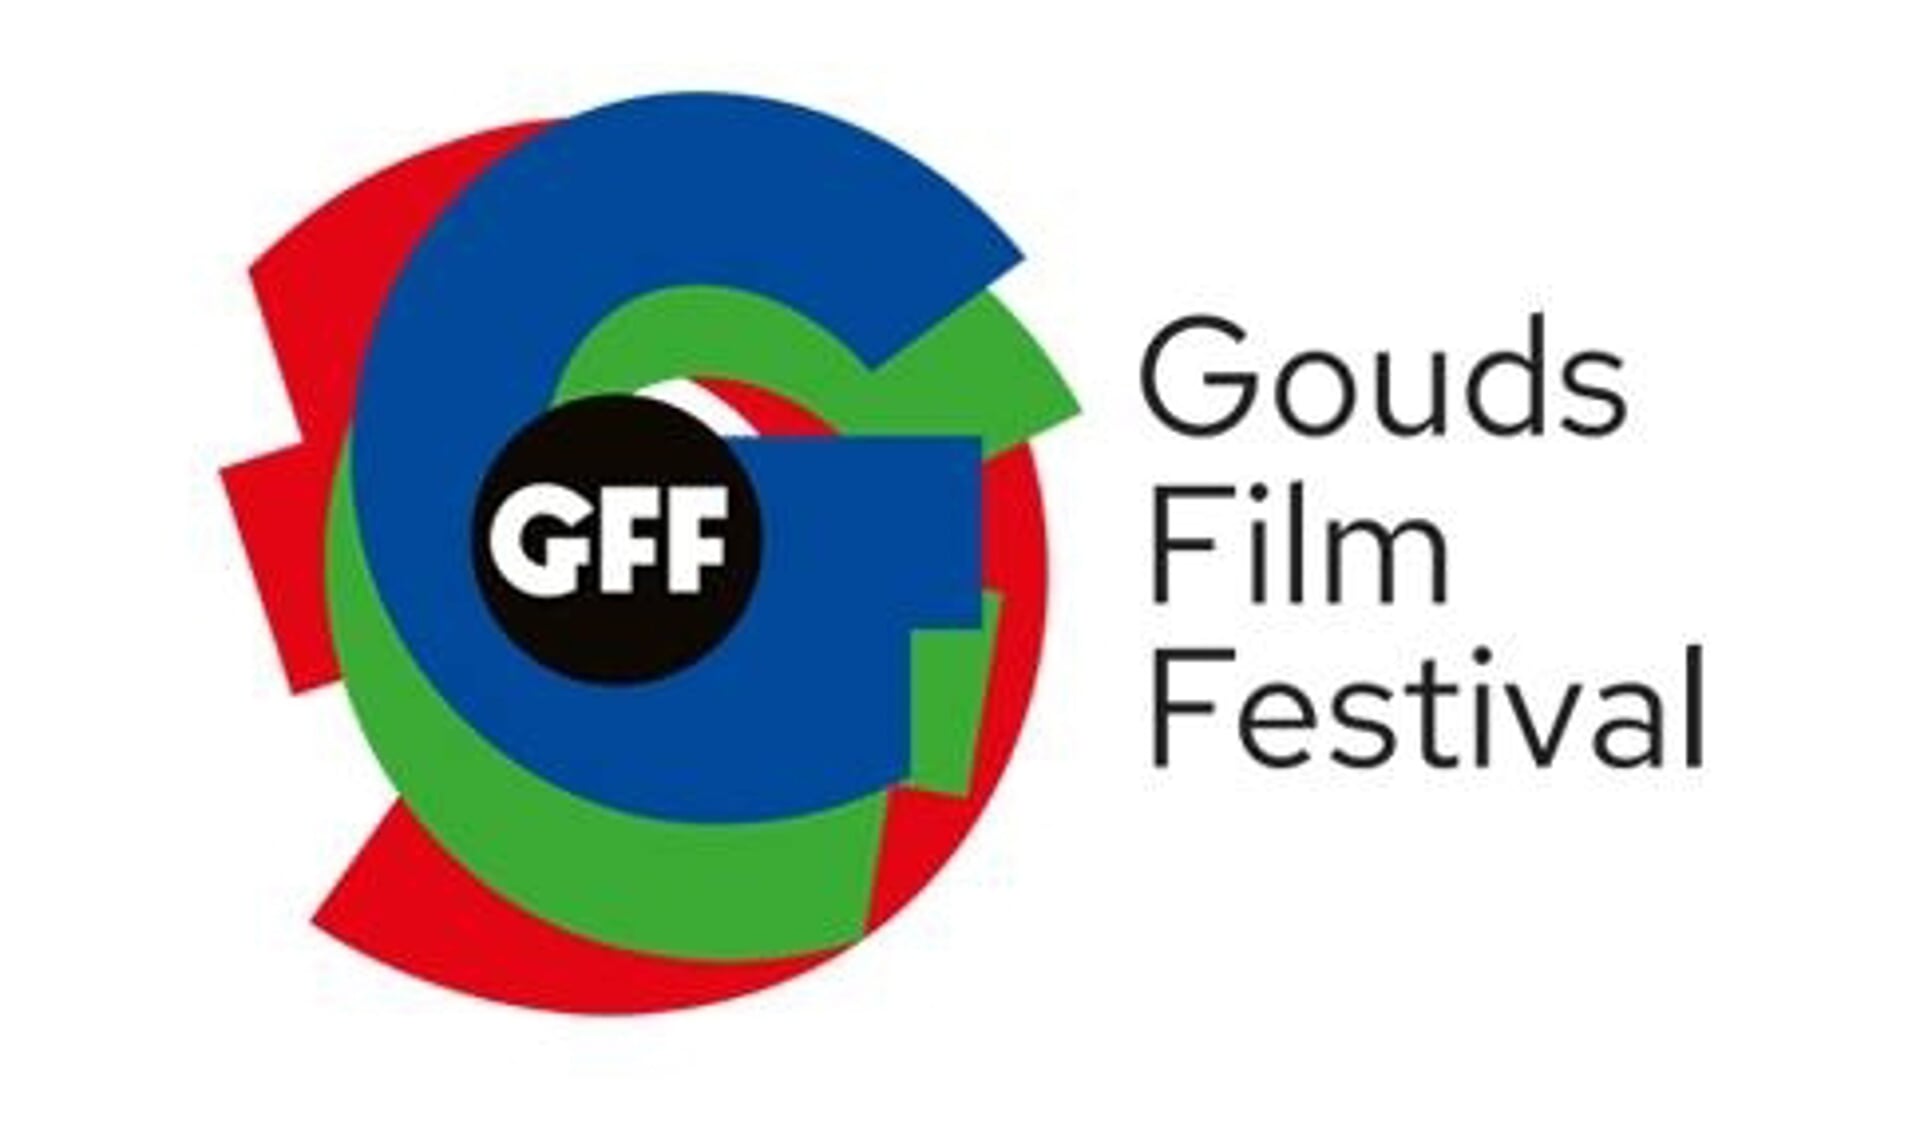 Gouds Film Festival